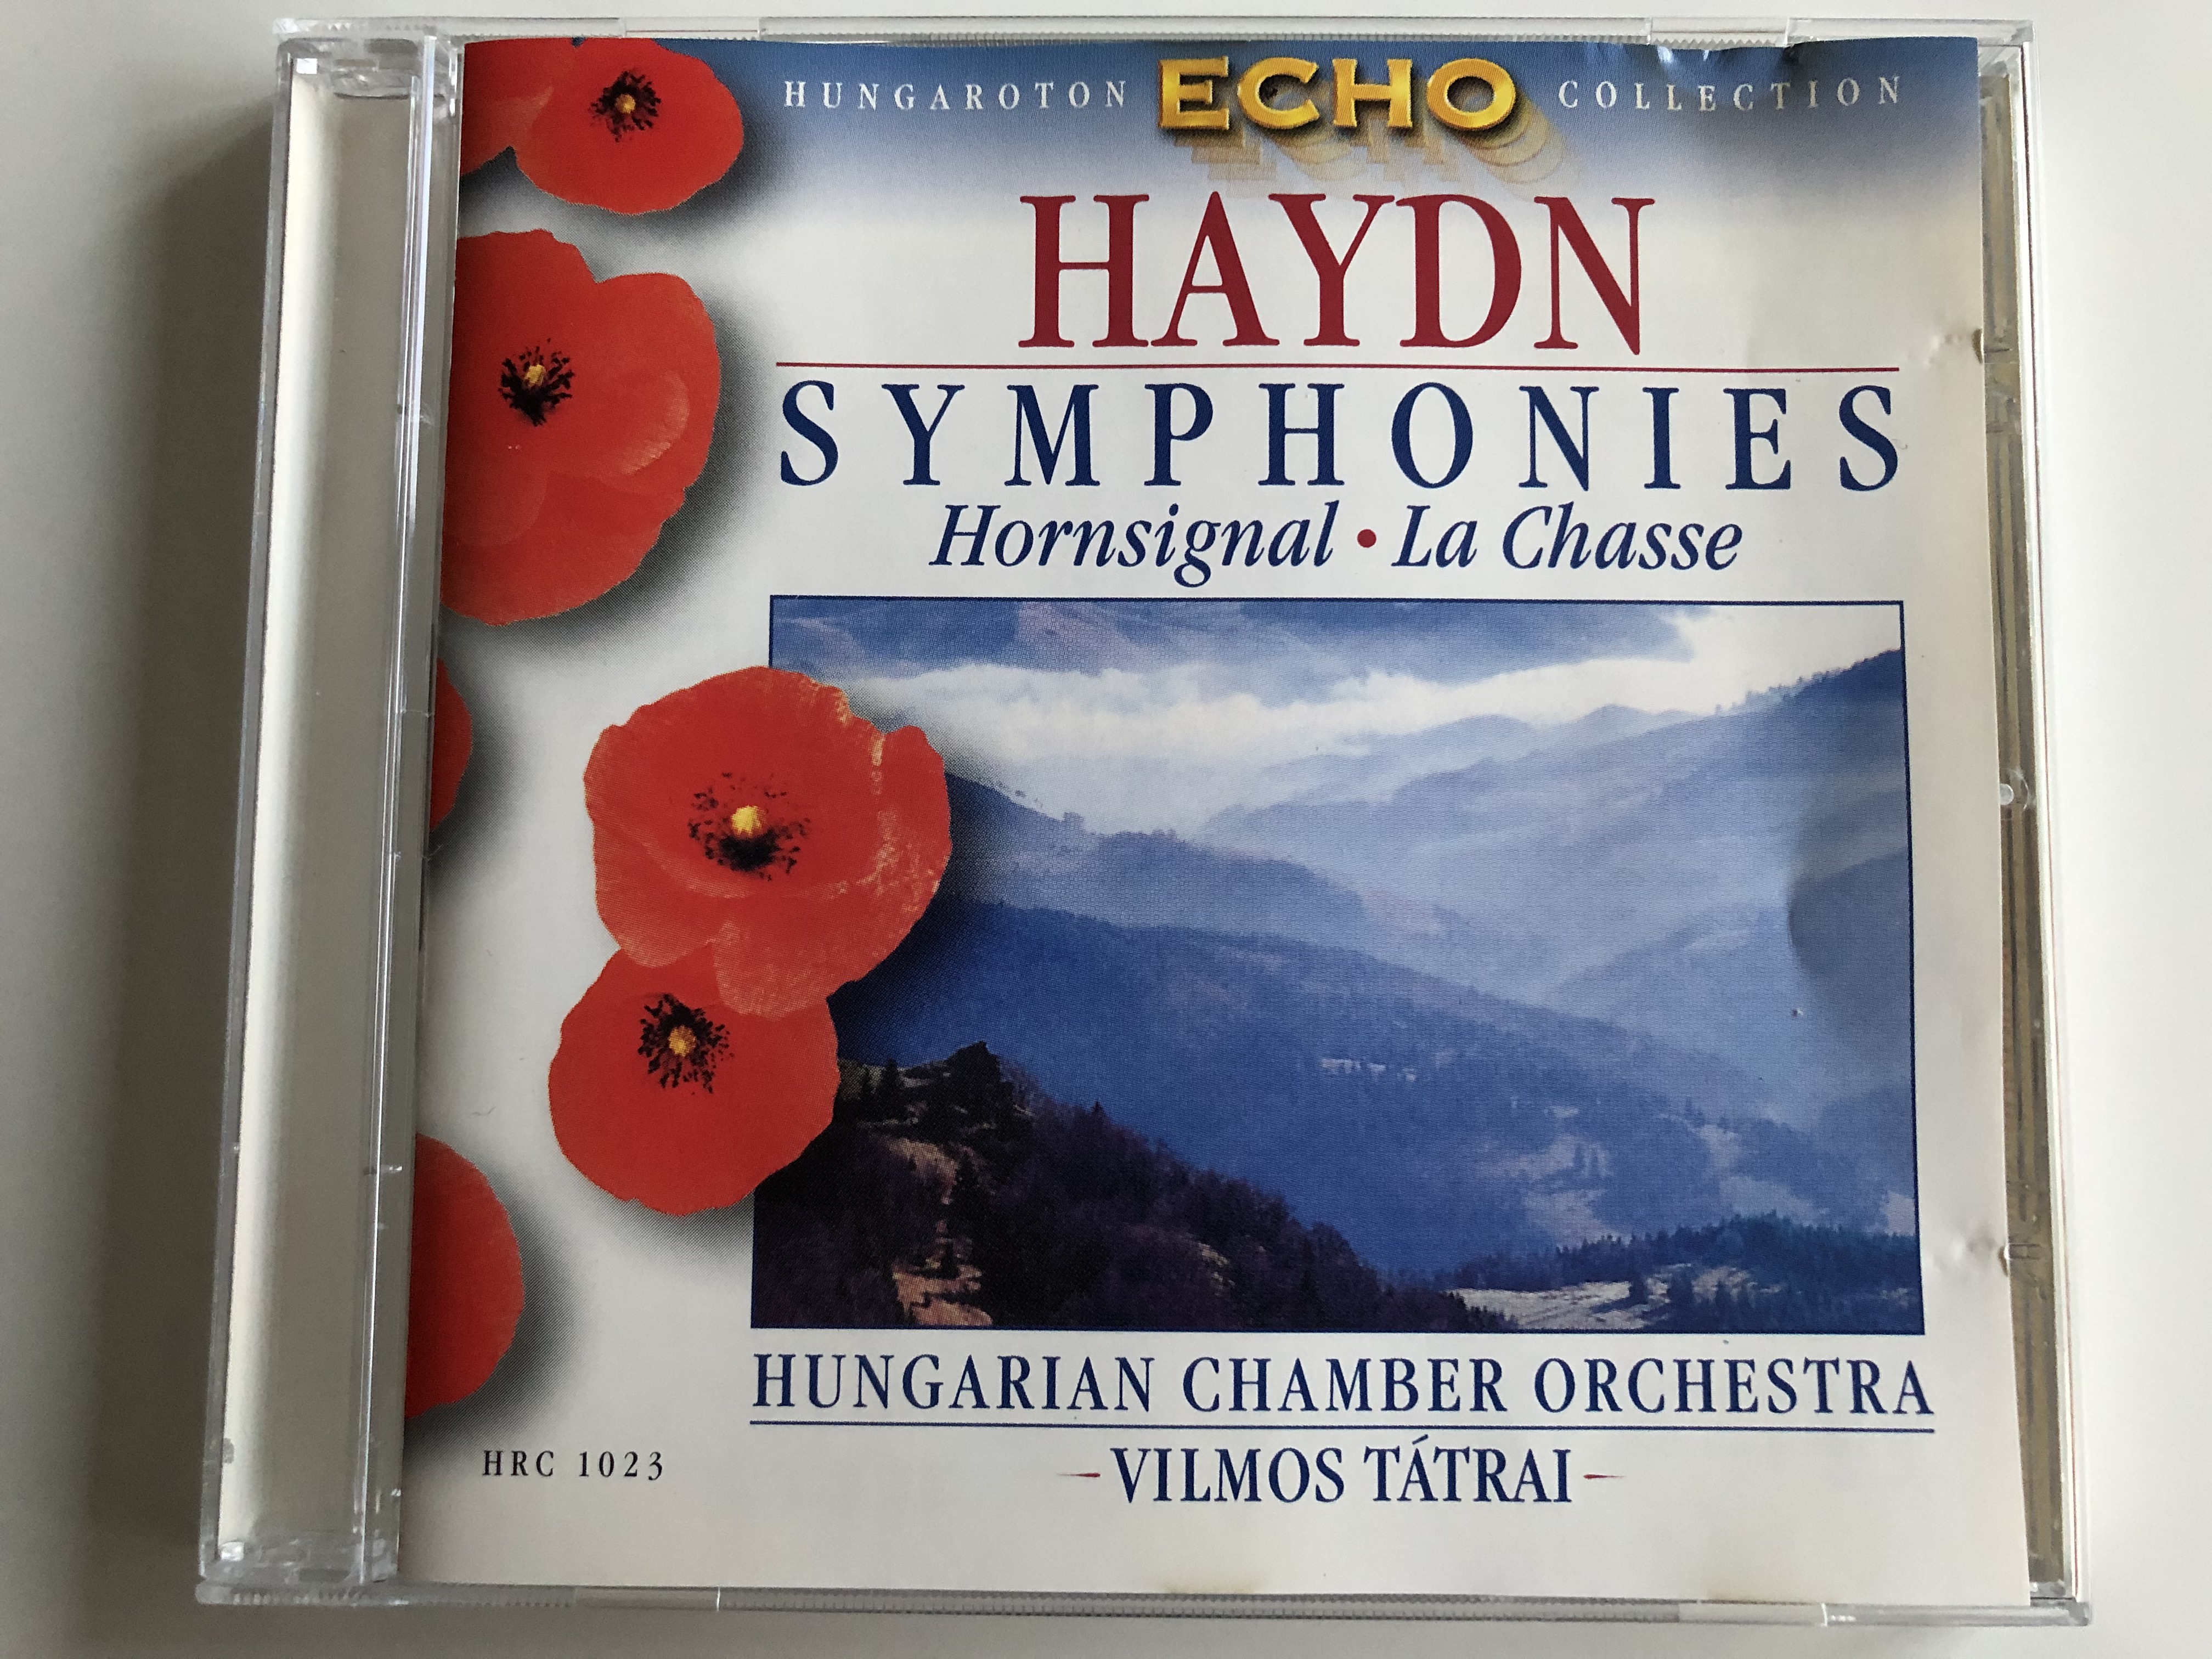 haydn-symphonies-hornsignal-la-chasse-hungarian-chamber-orchestra-vilmos-t-trai-hungaroton-classic-audio-cd-1965-stereo-hrc-1023-1-.jpg